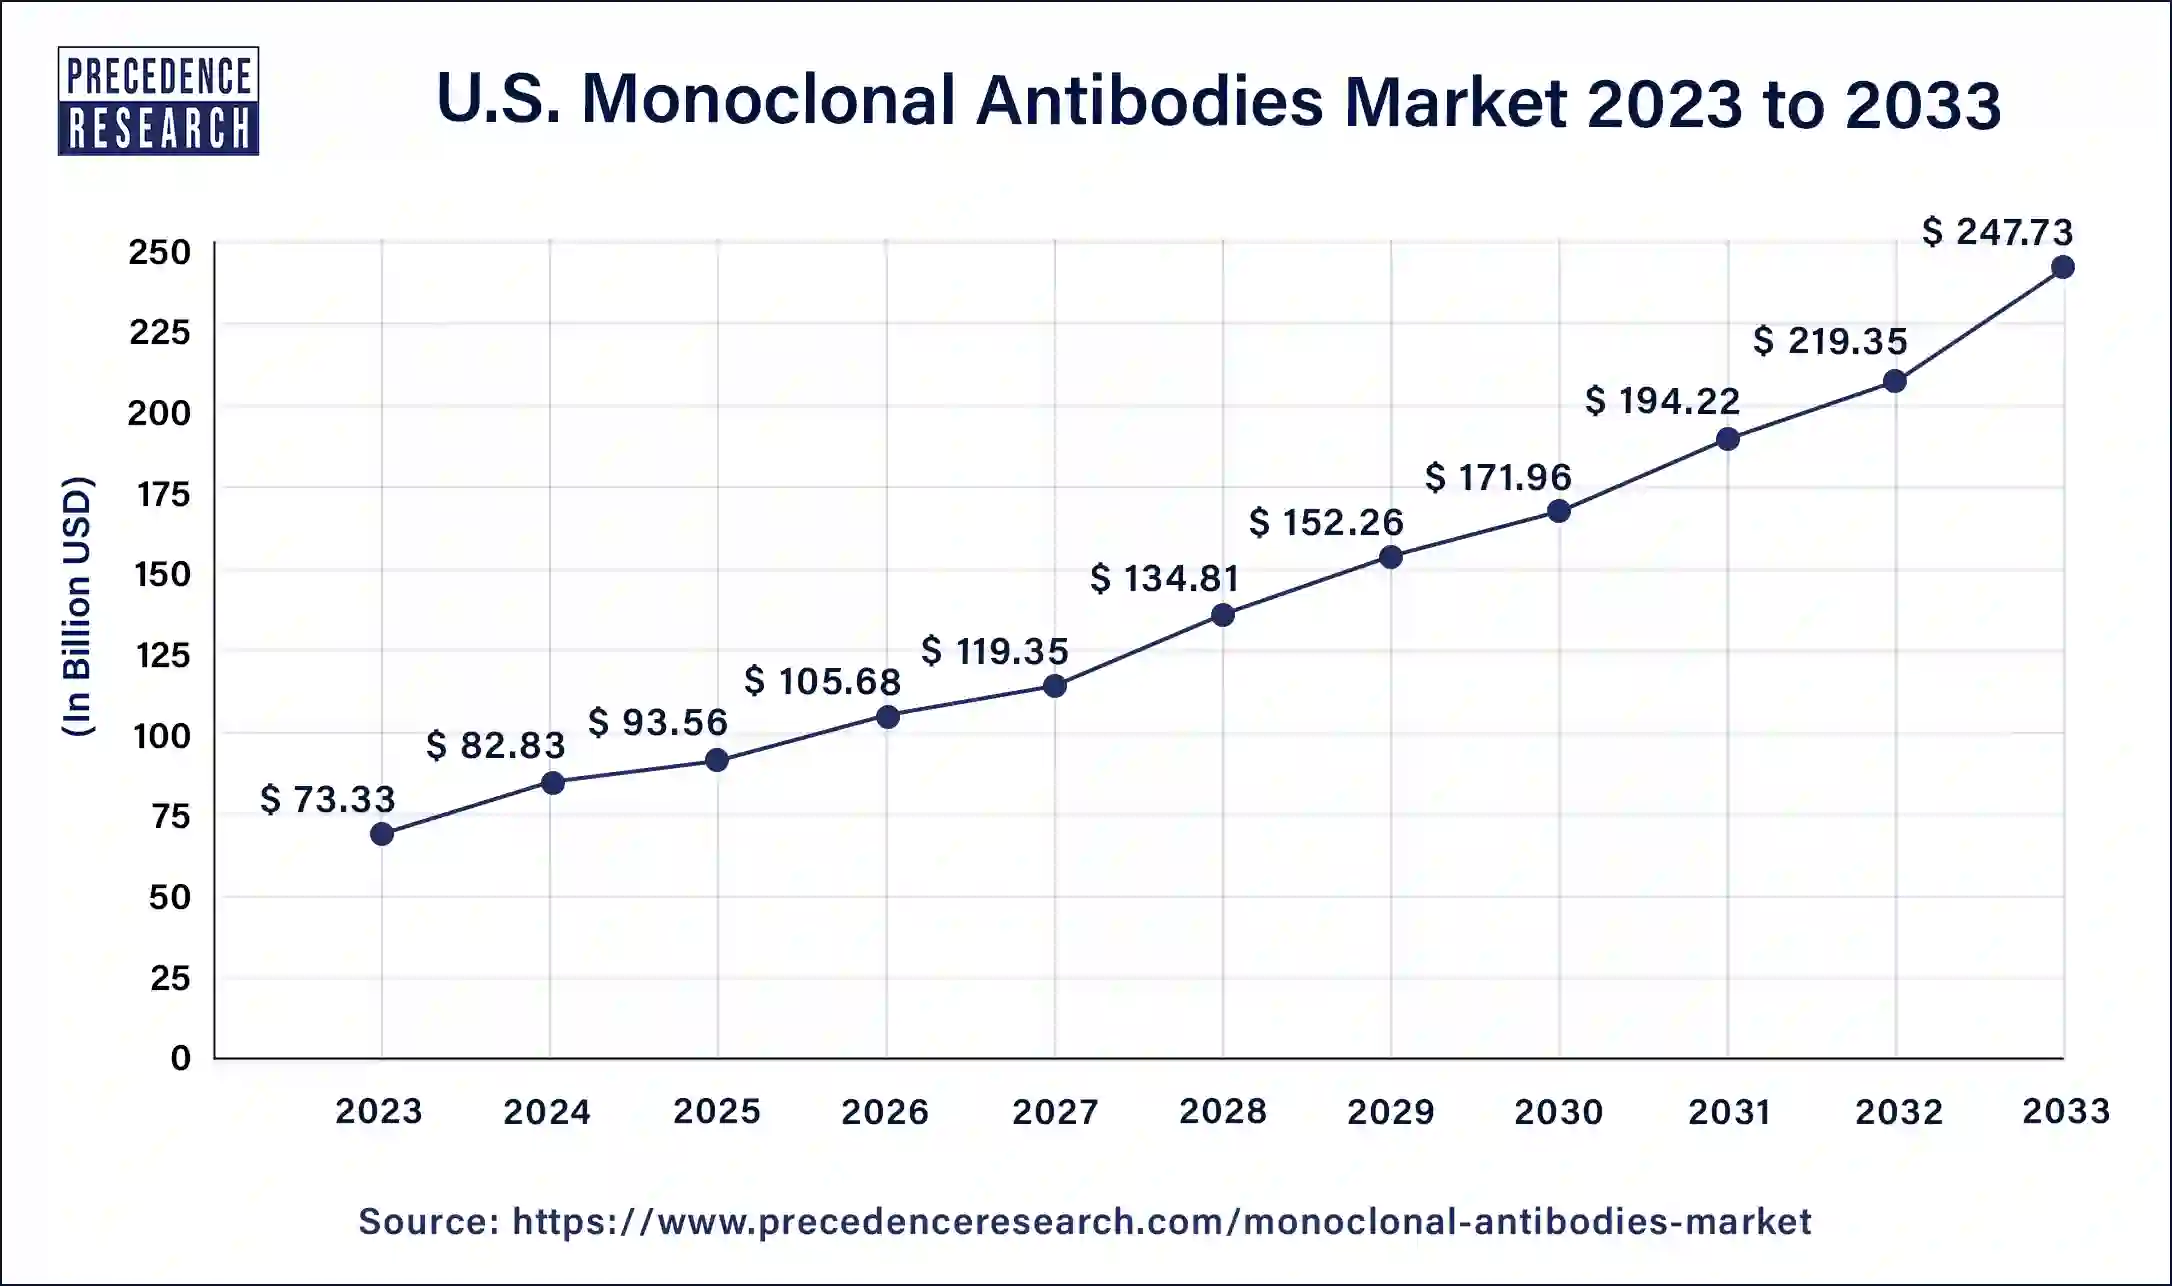 U.S. Monoclonal Antibodies Market Size 2024 to 2033